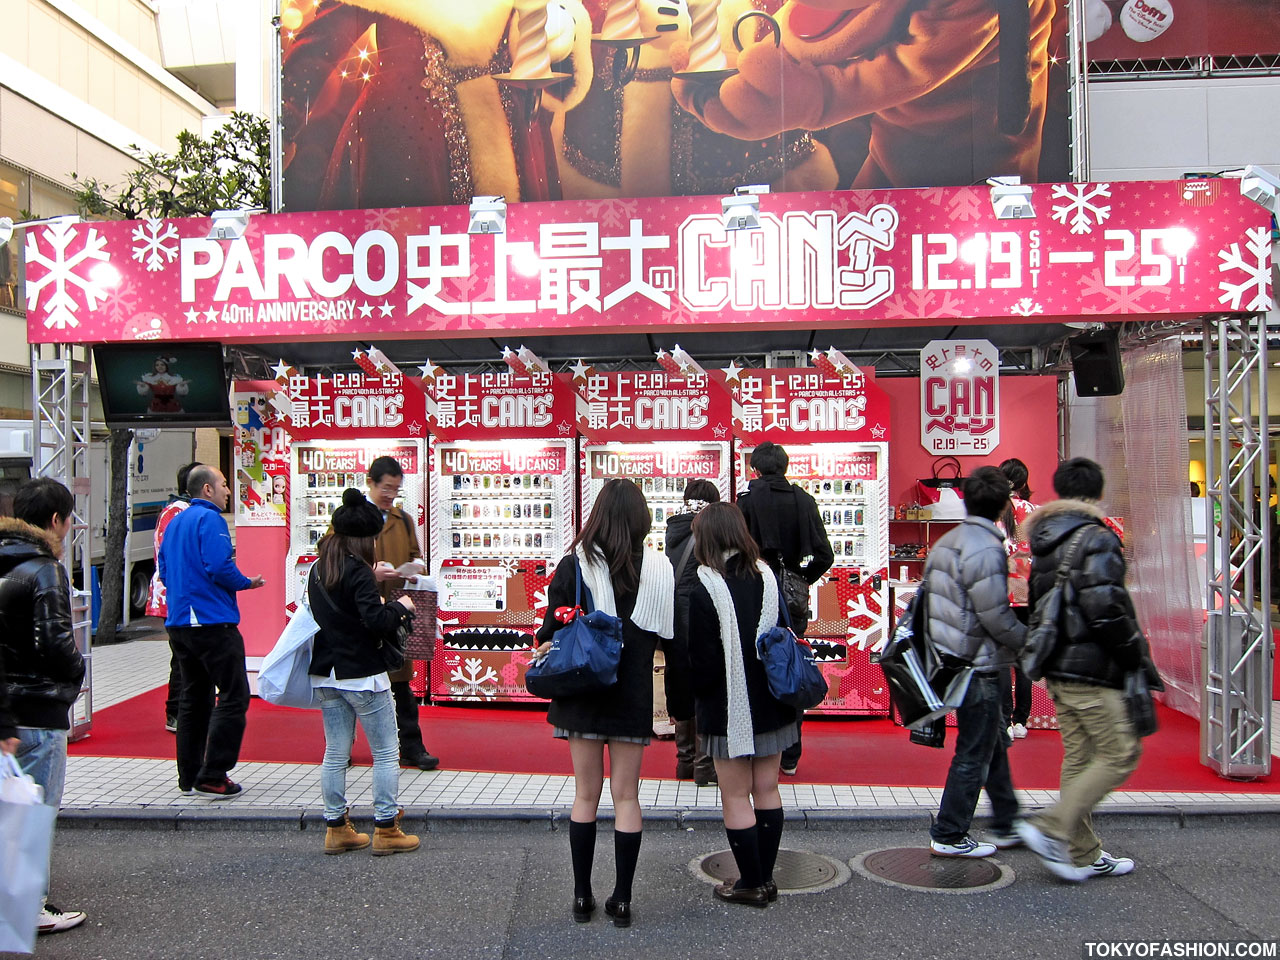 Parco Japan 40th Anniversary Xmas Art Cans – Tokyo Fashion